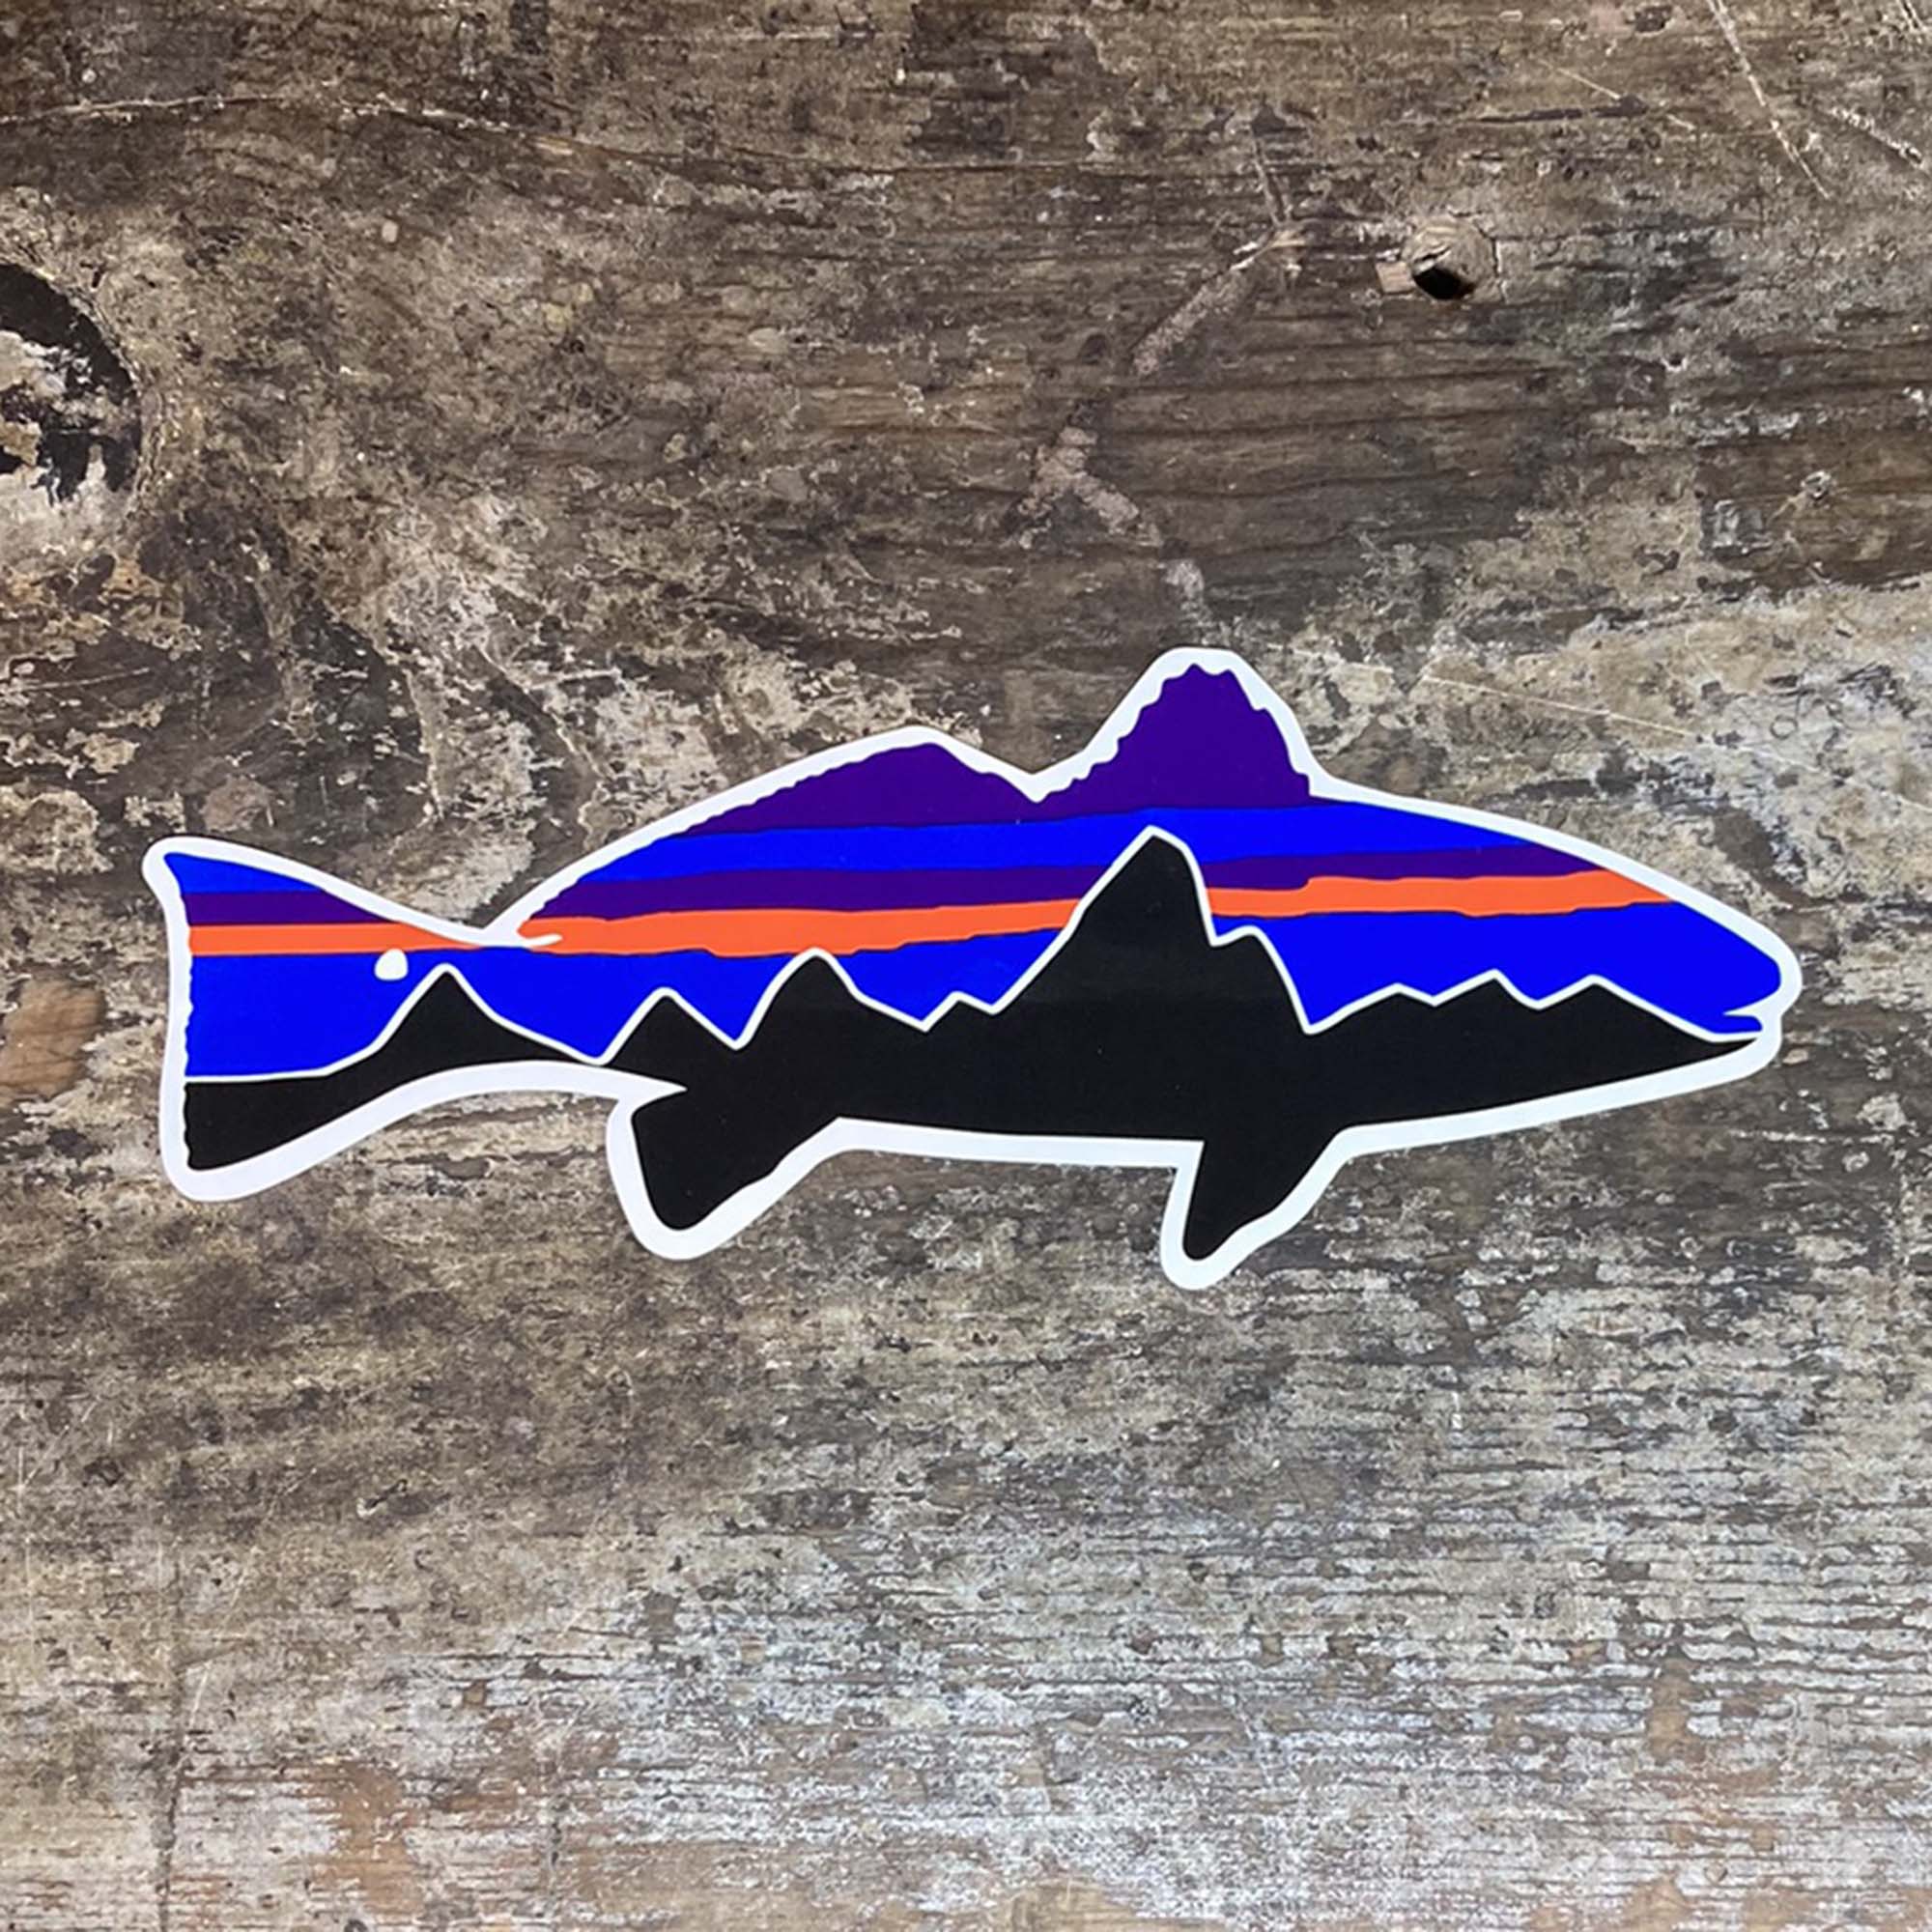 https://dragonflyanglers.com/wp-content/uploads/2022/03/patagonia-fitzroy-redfish-sticker.jpg